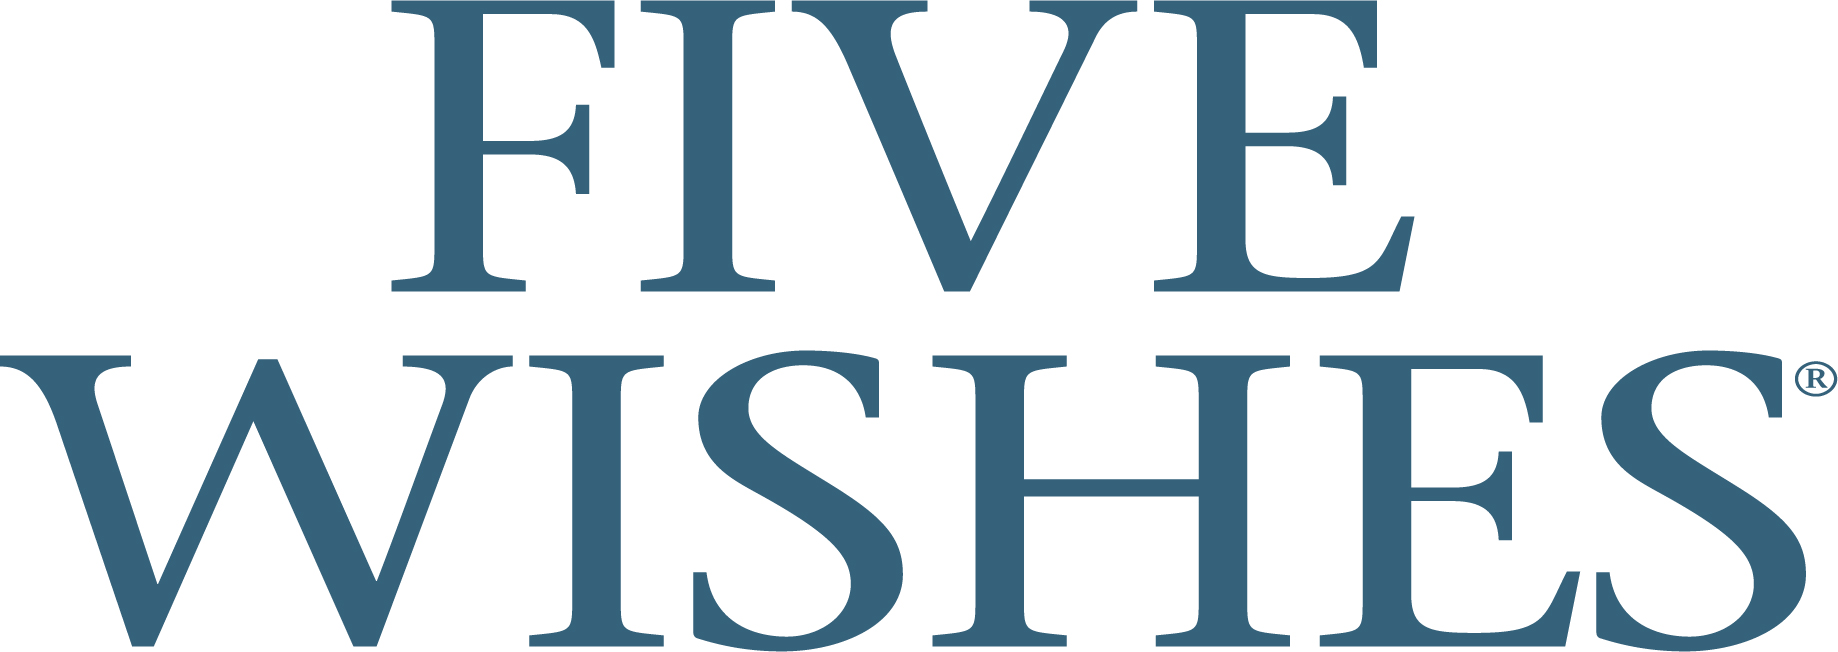 2017 FiveWishes Logo Blue